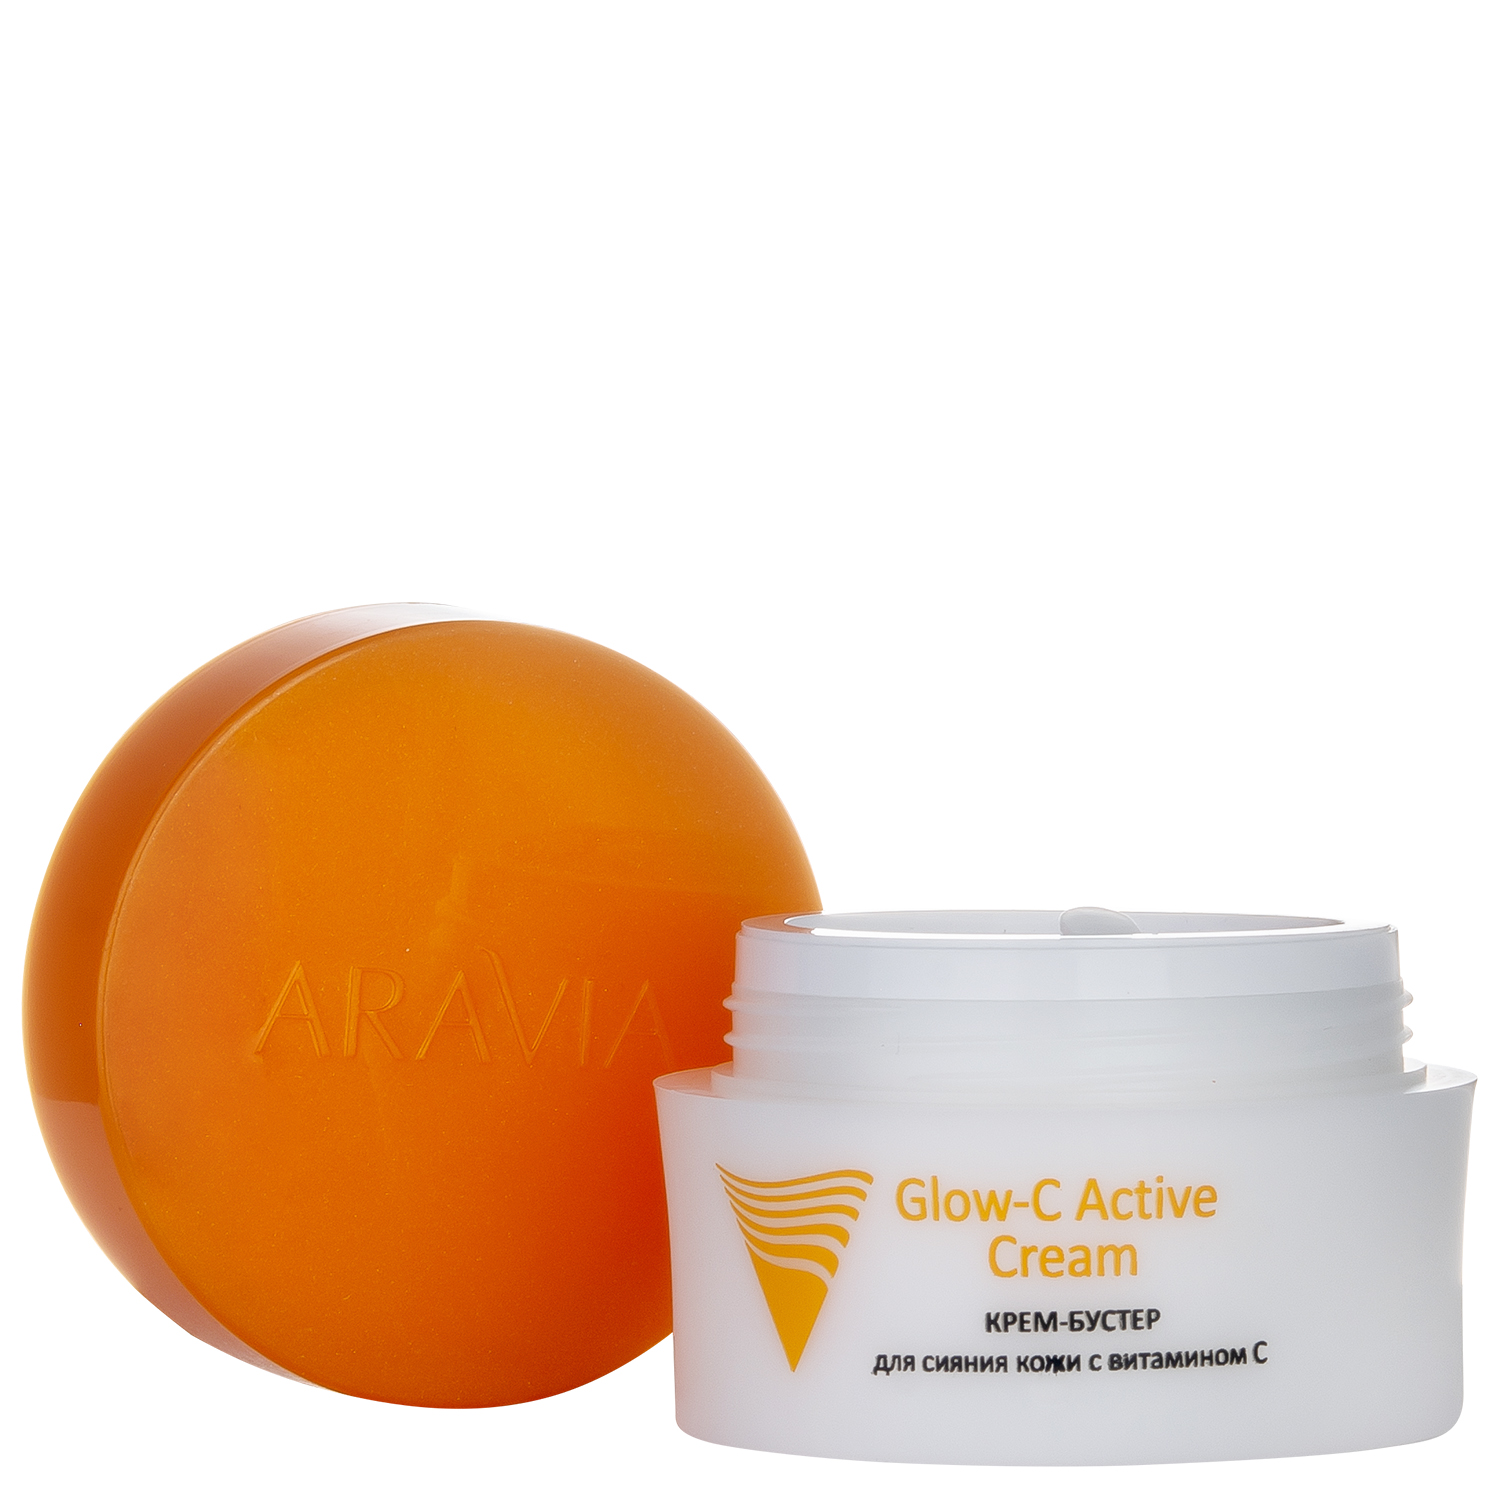 Крем-бустер для сияния кожи с витамином С Glow-C Active Cream, 50 мл, ARAVIA Professional